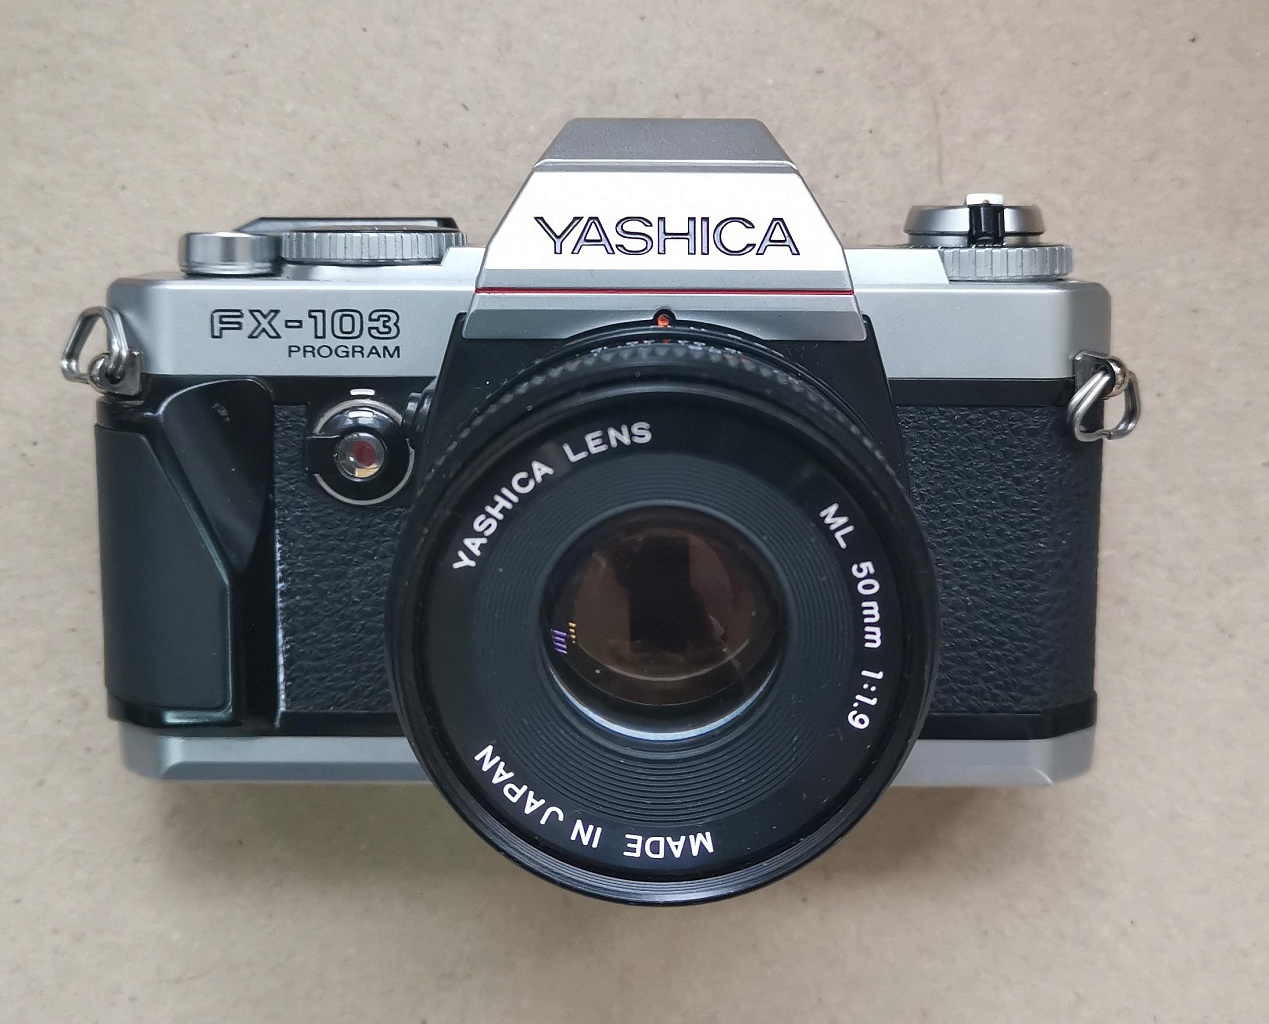 Yashica fx-103 program + yashica lens ml 50 mm f/1.9 фото №1